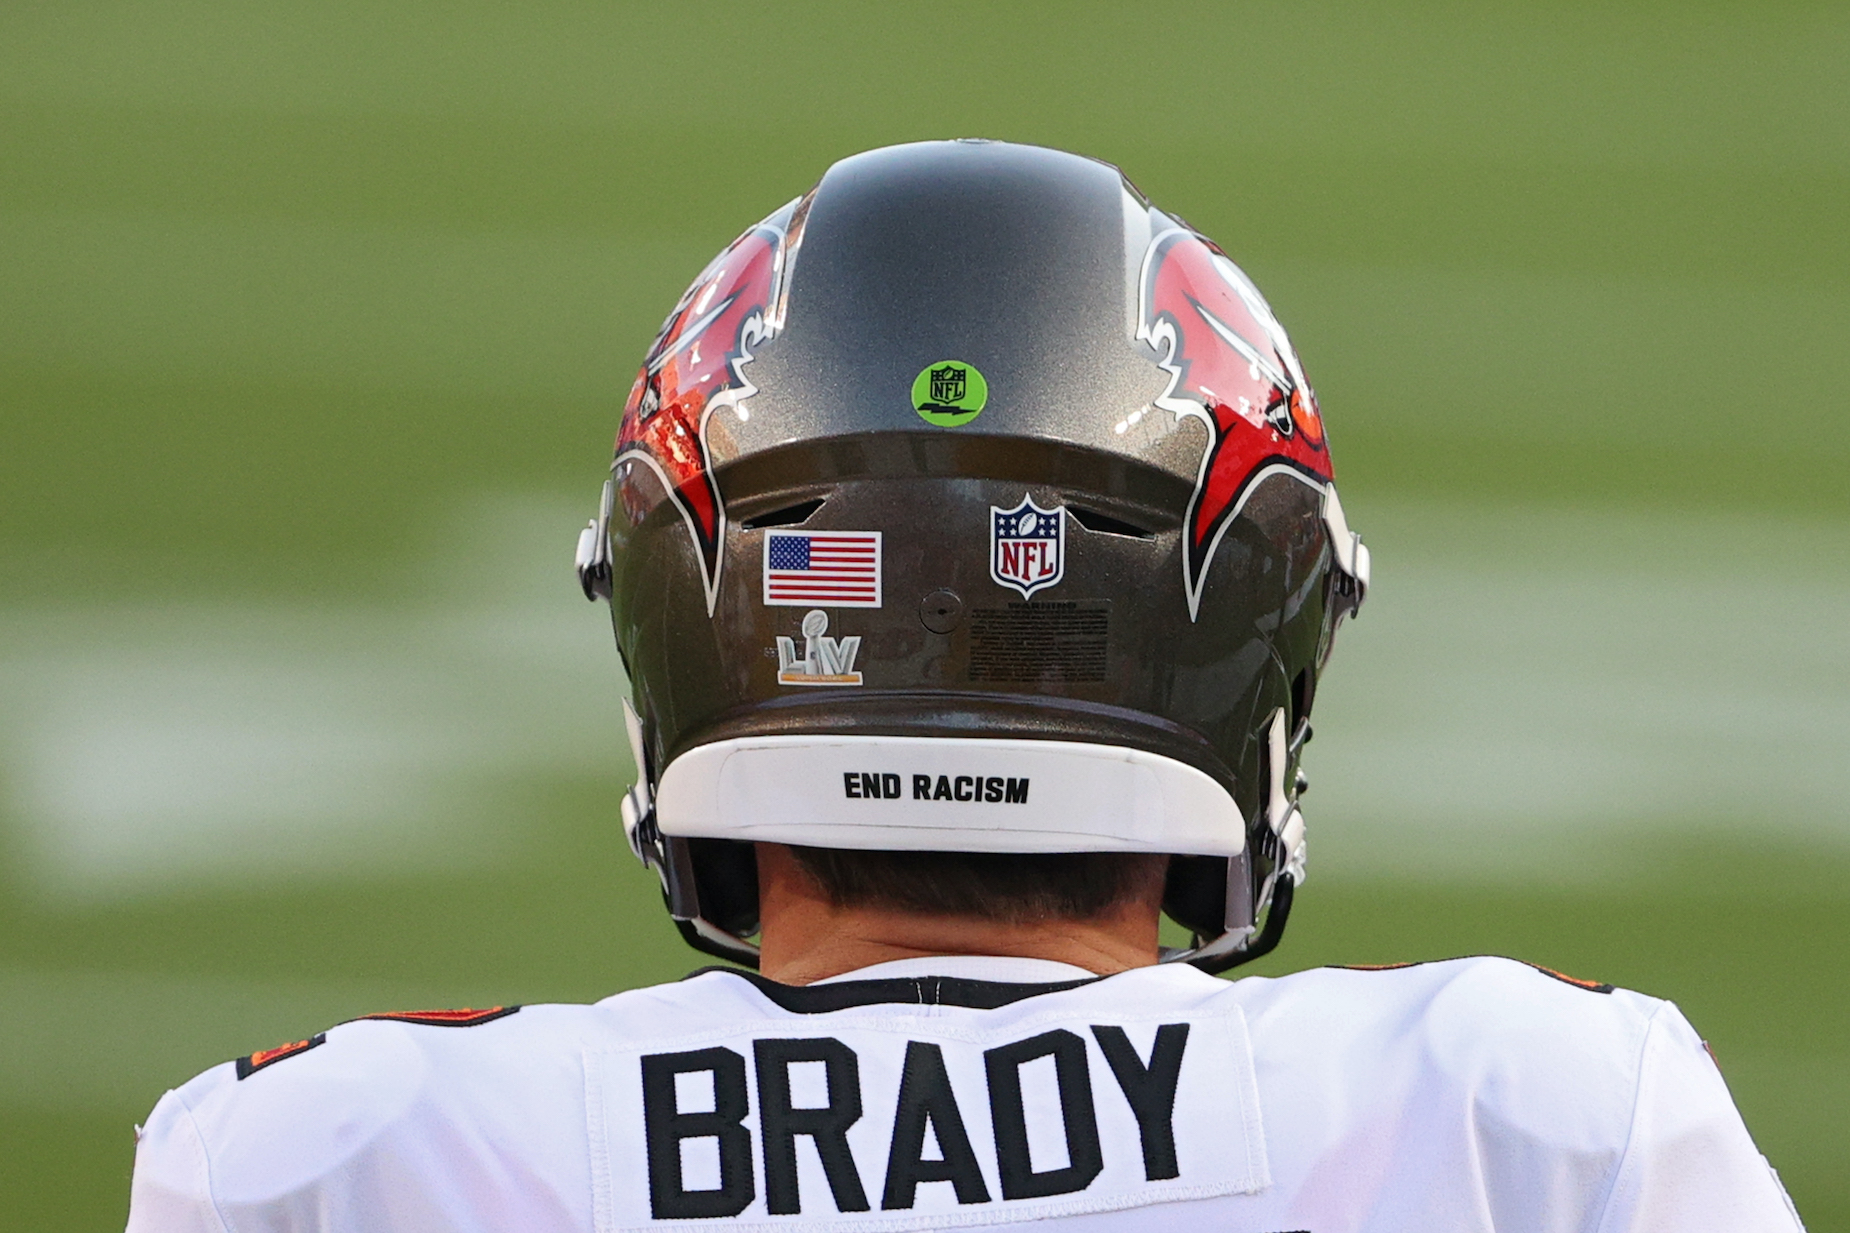 Tampa Bay Buccaneers quarterback Tom Brady ahead of Super Bowl 55.